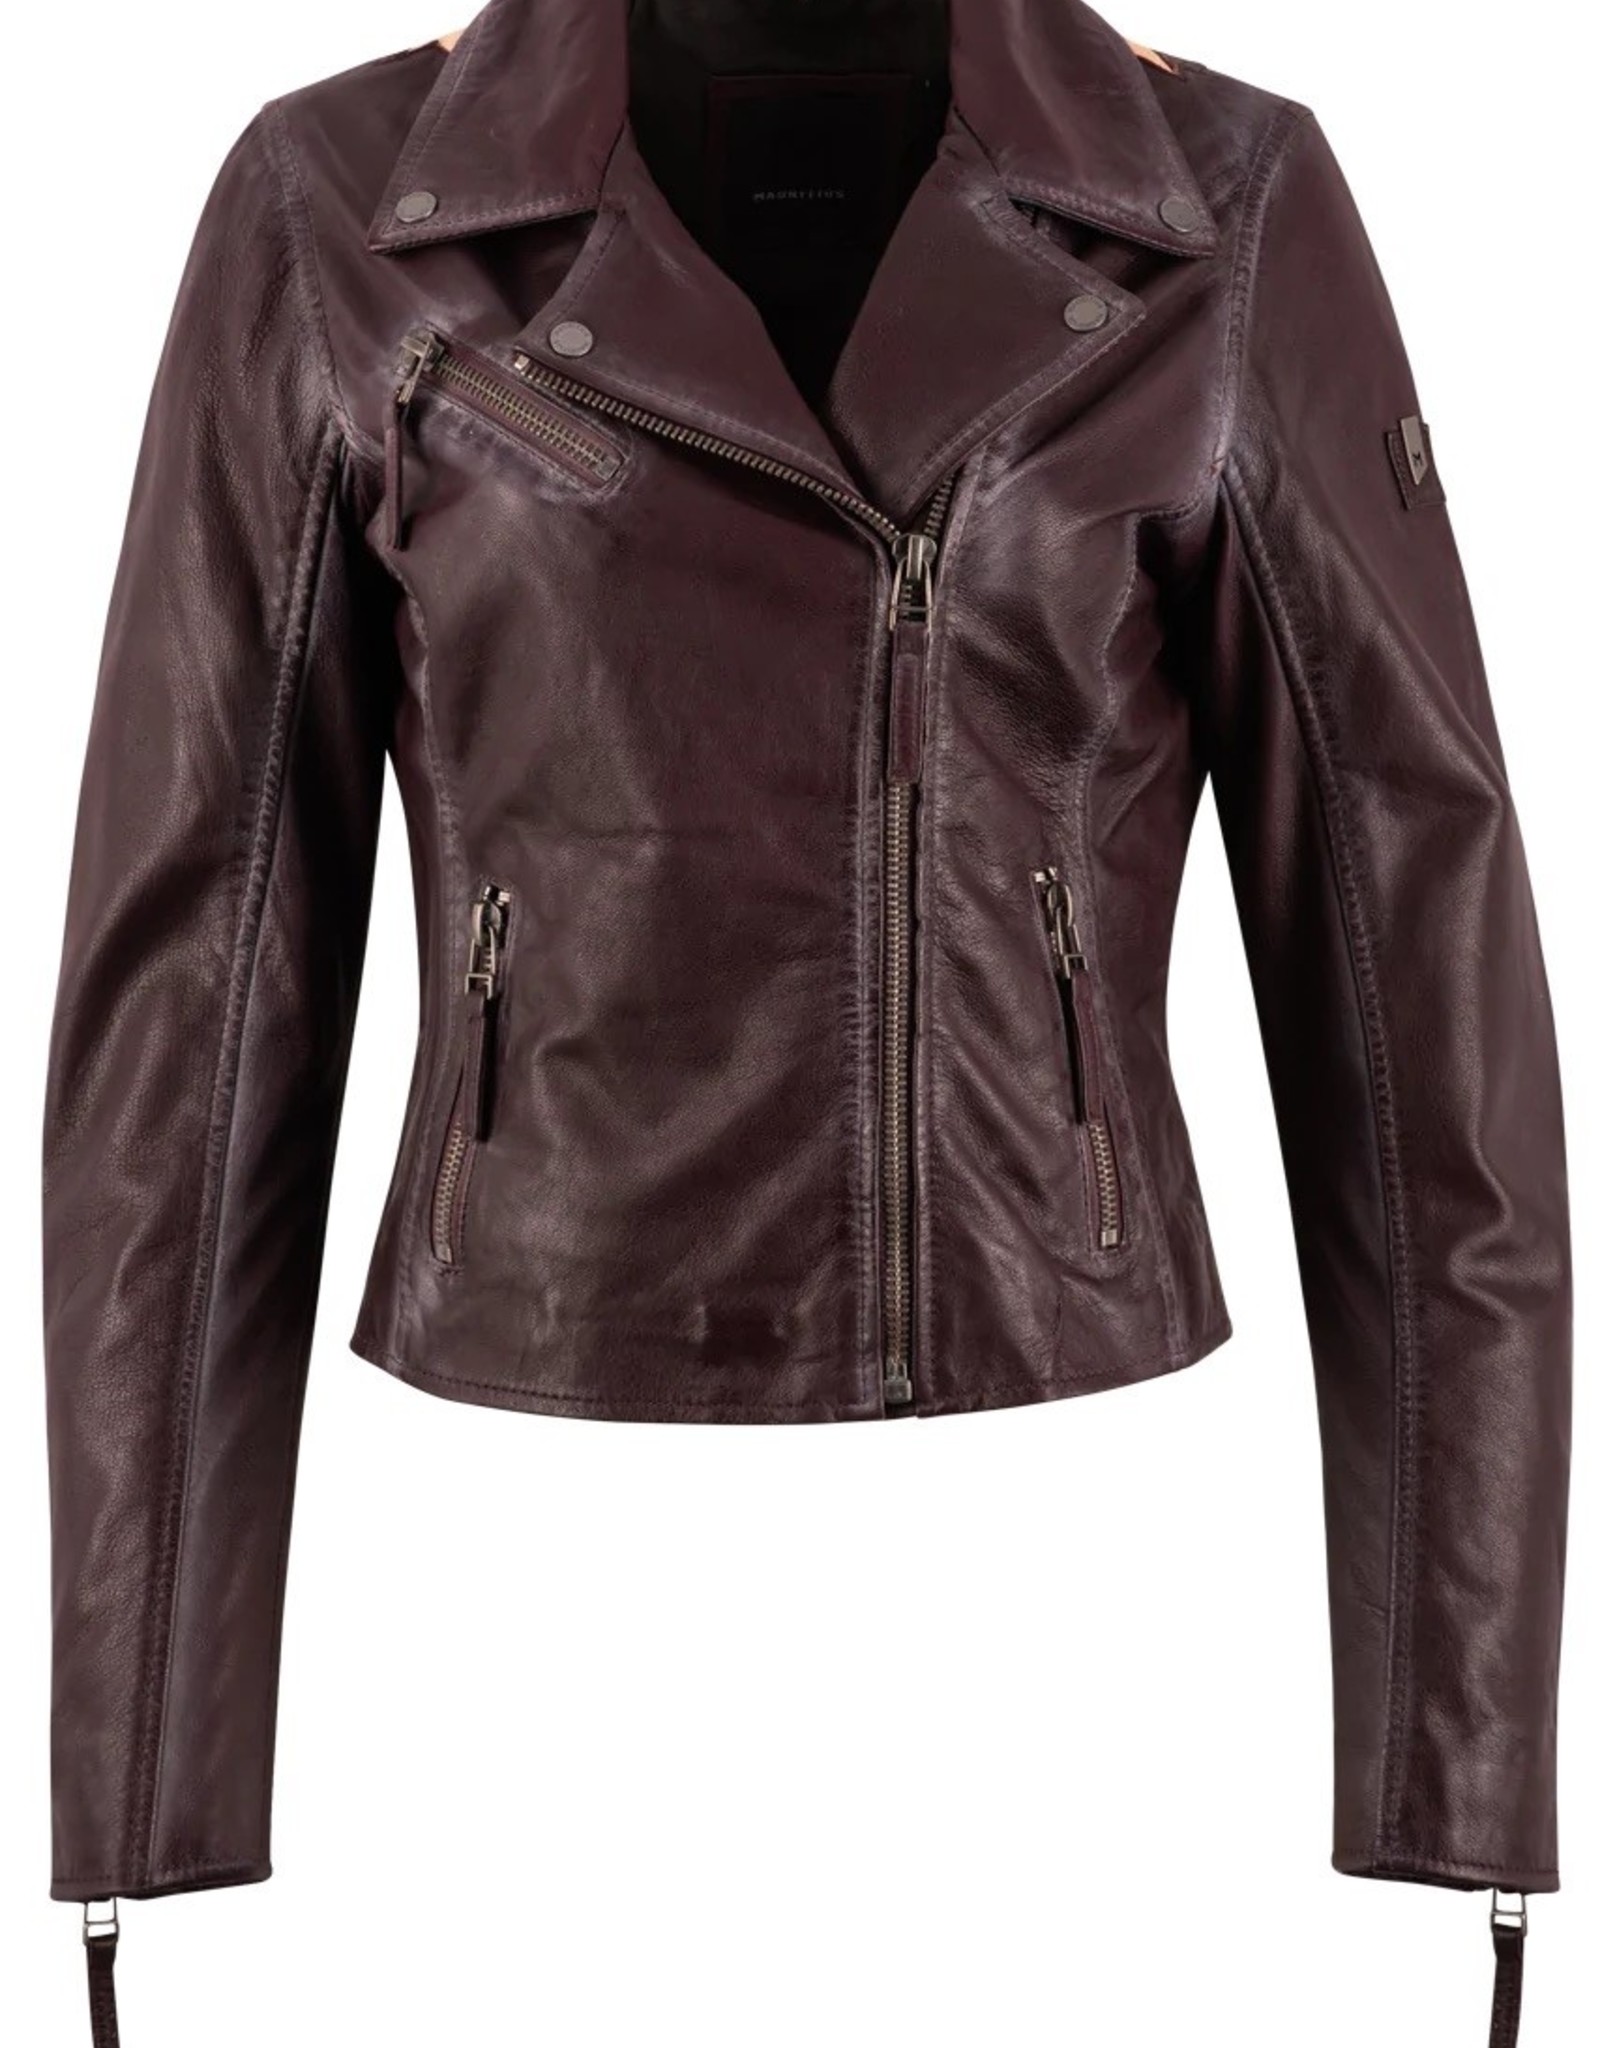 Mauritius Christy Leather Jacket - Lovebird Boutique